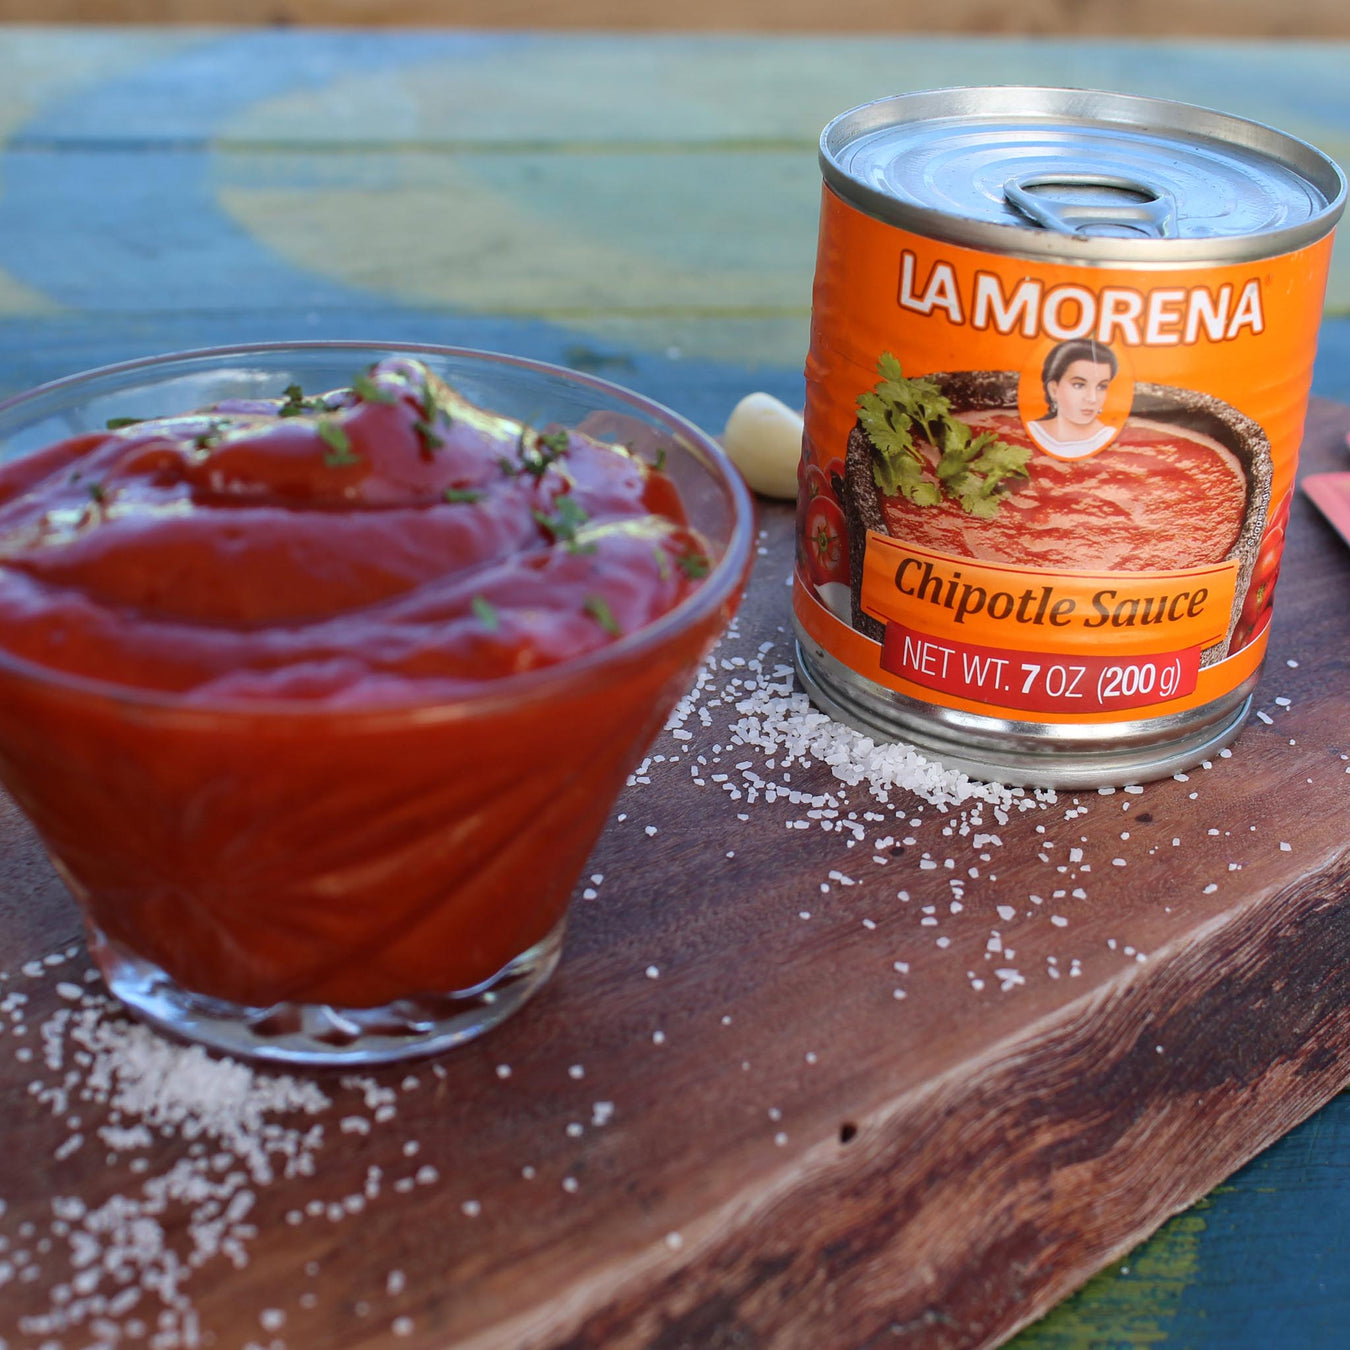 La Morena Sauces - Chipotle, Salsas and more